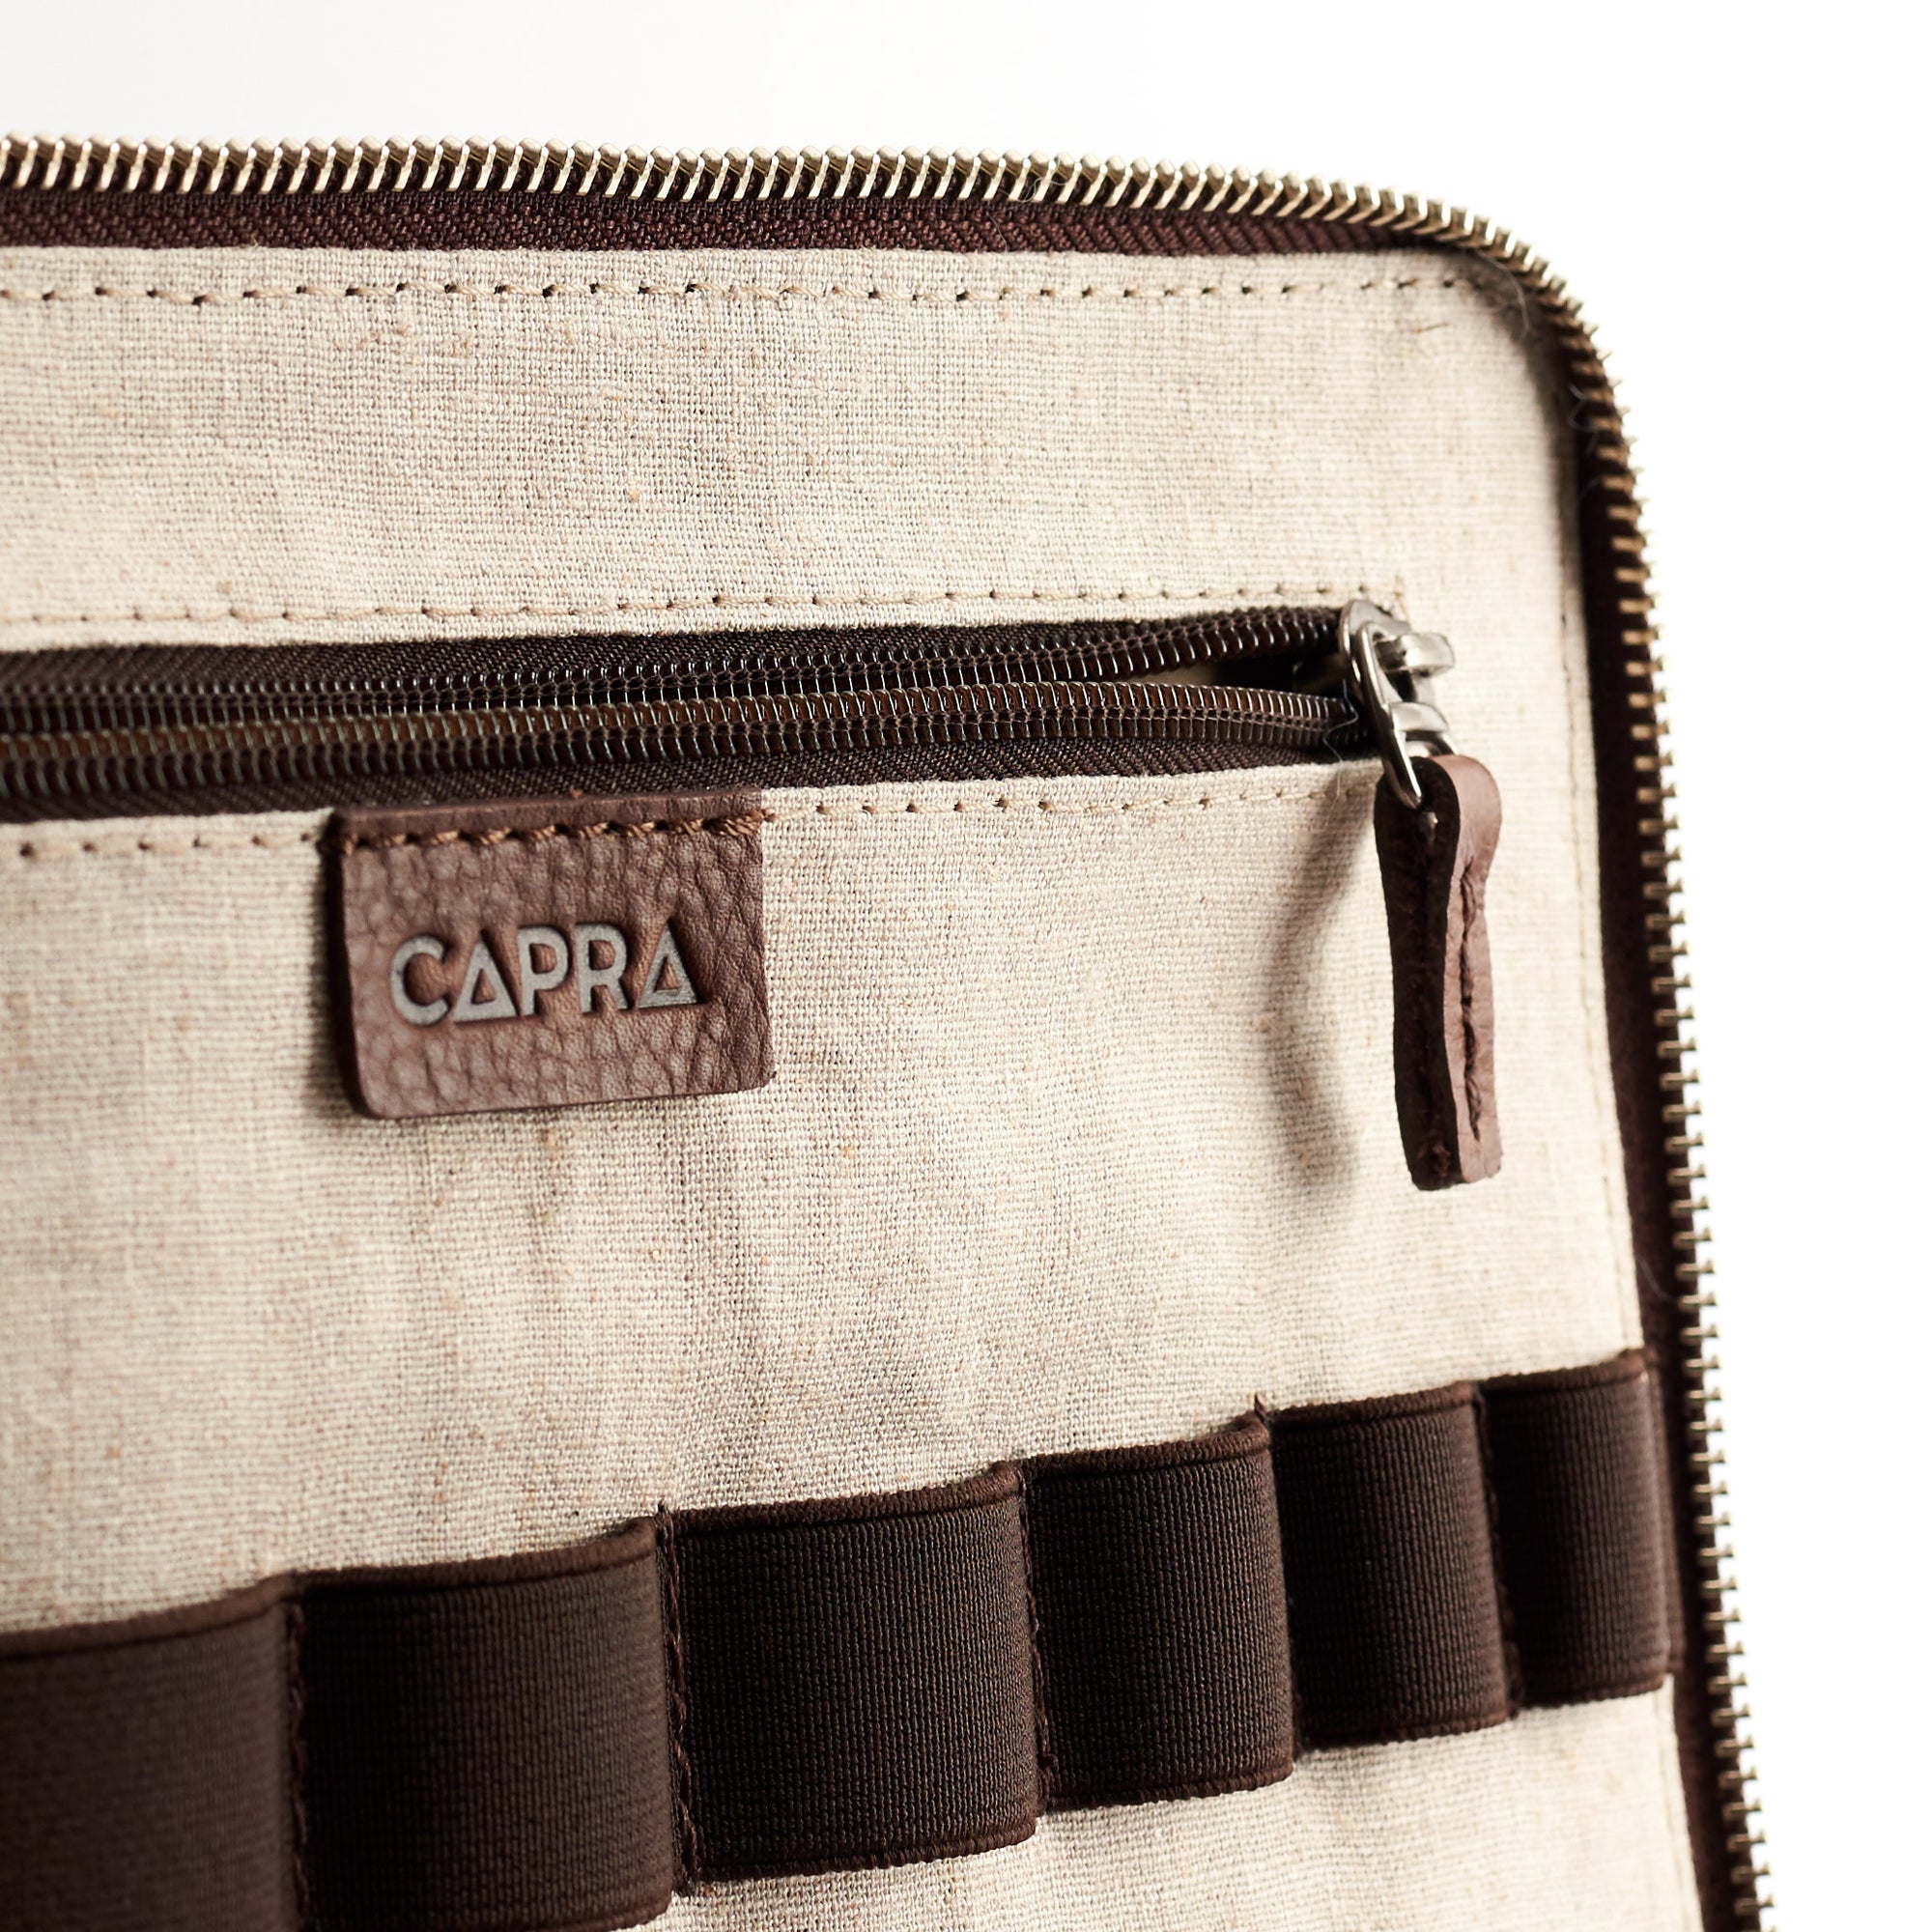 Linen interior. Brown electronics organizer. Tech laptop tablet bag by Capra Leather